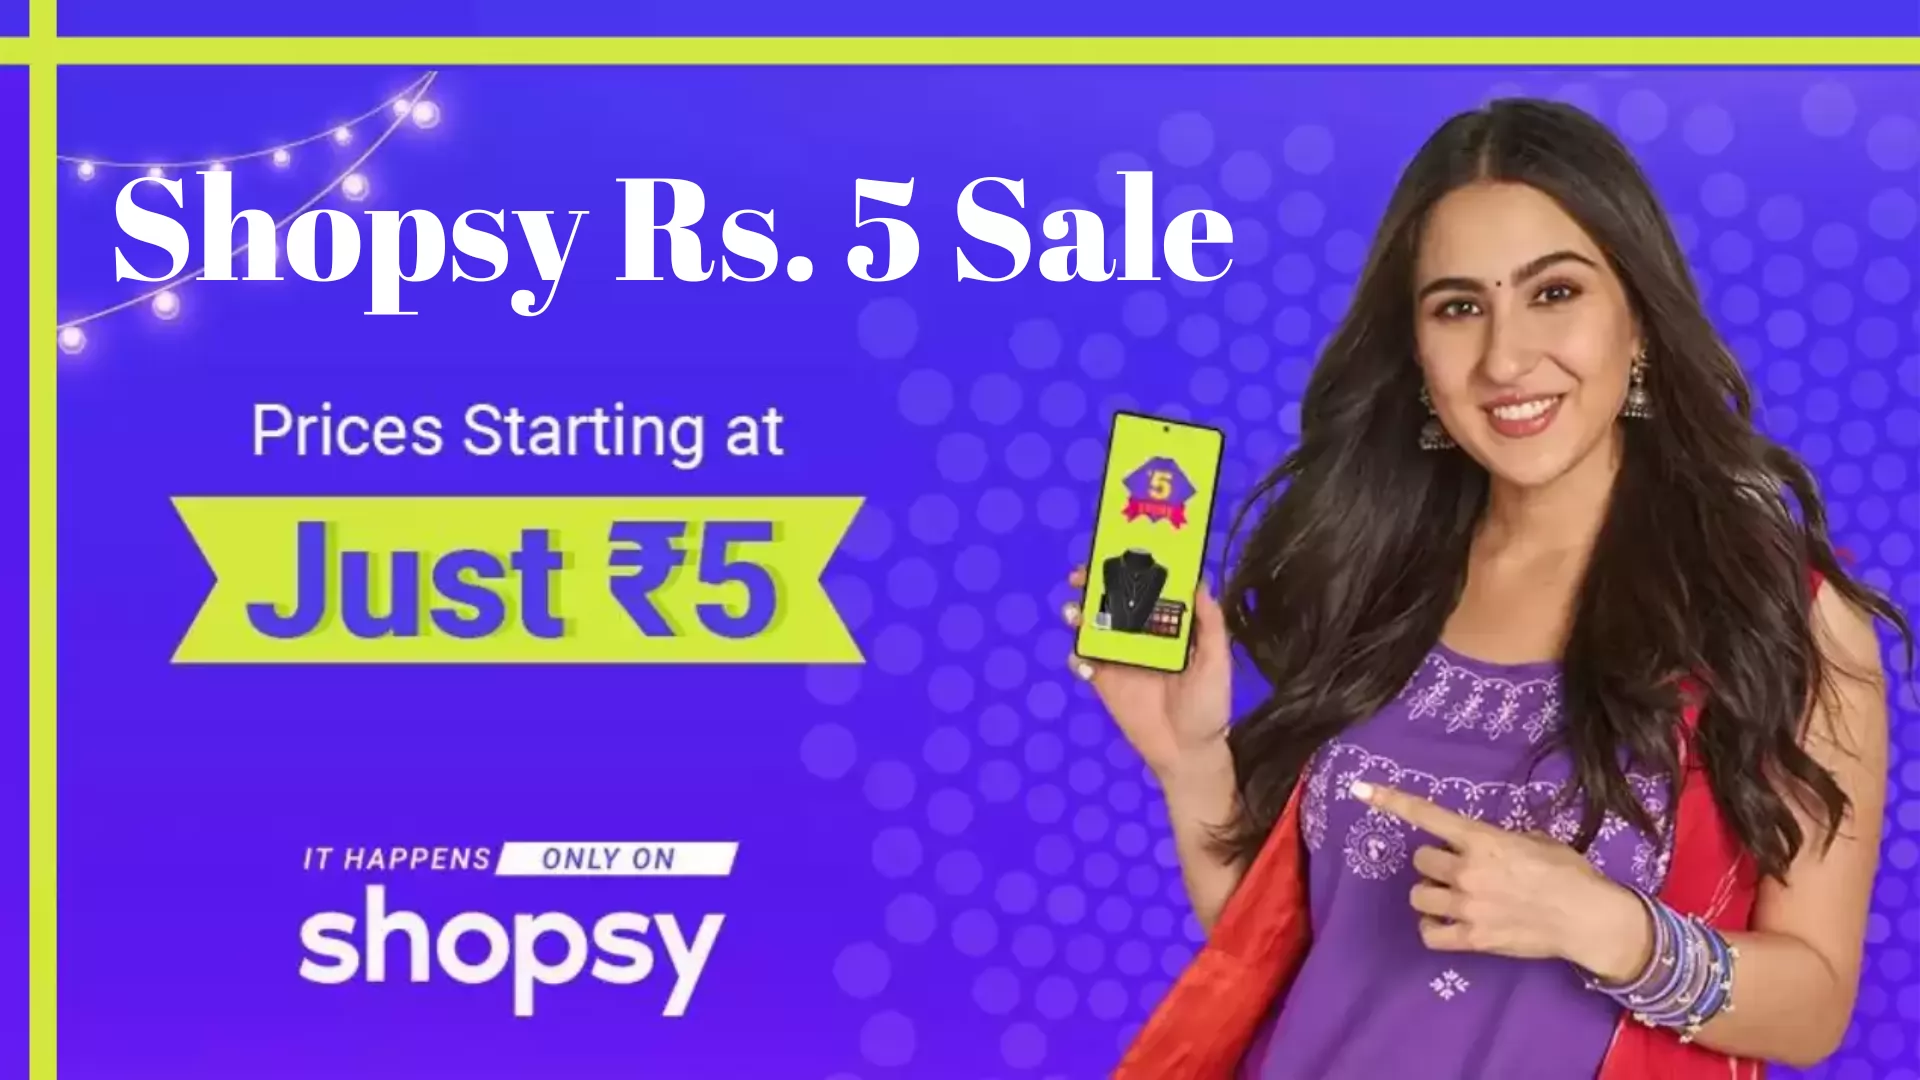 Shopsy Rs. 5 Sale